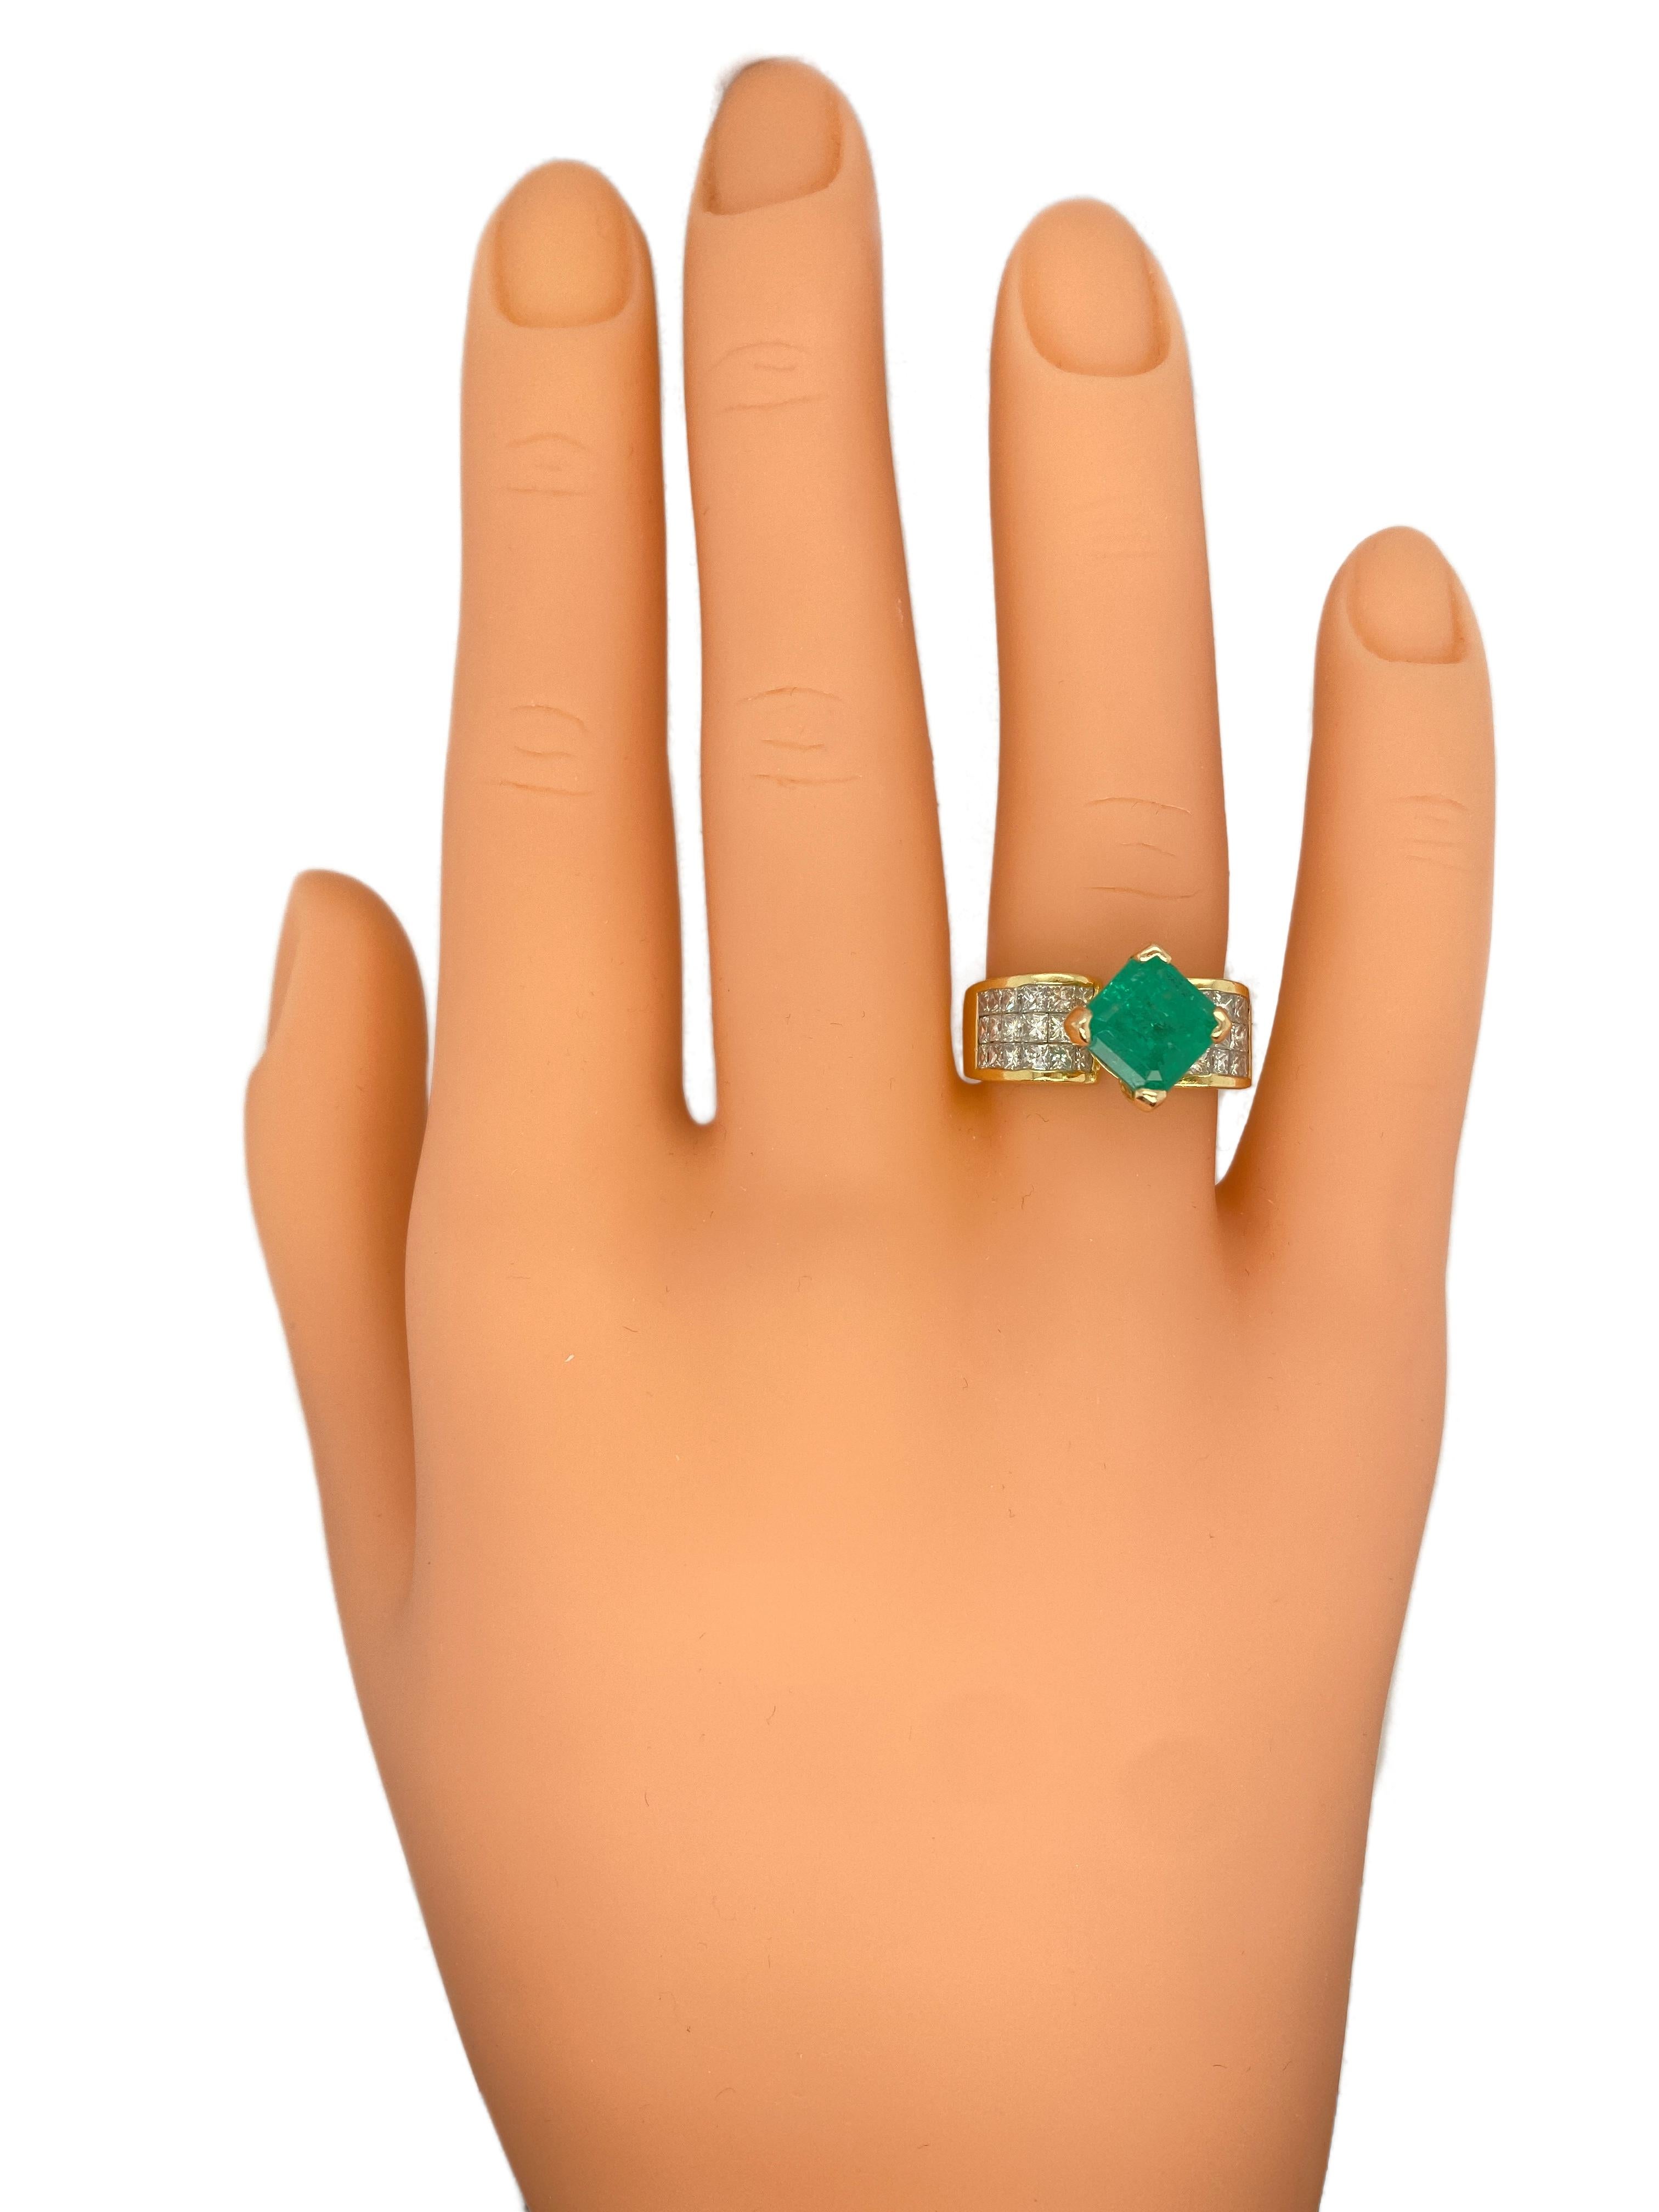 Square Cut Le Vian 5 Carat Emerald and Diamond Ring in 18 Karat Gold